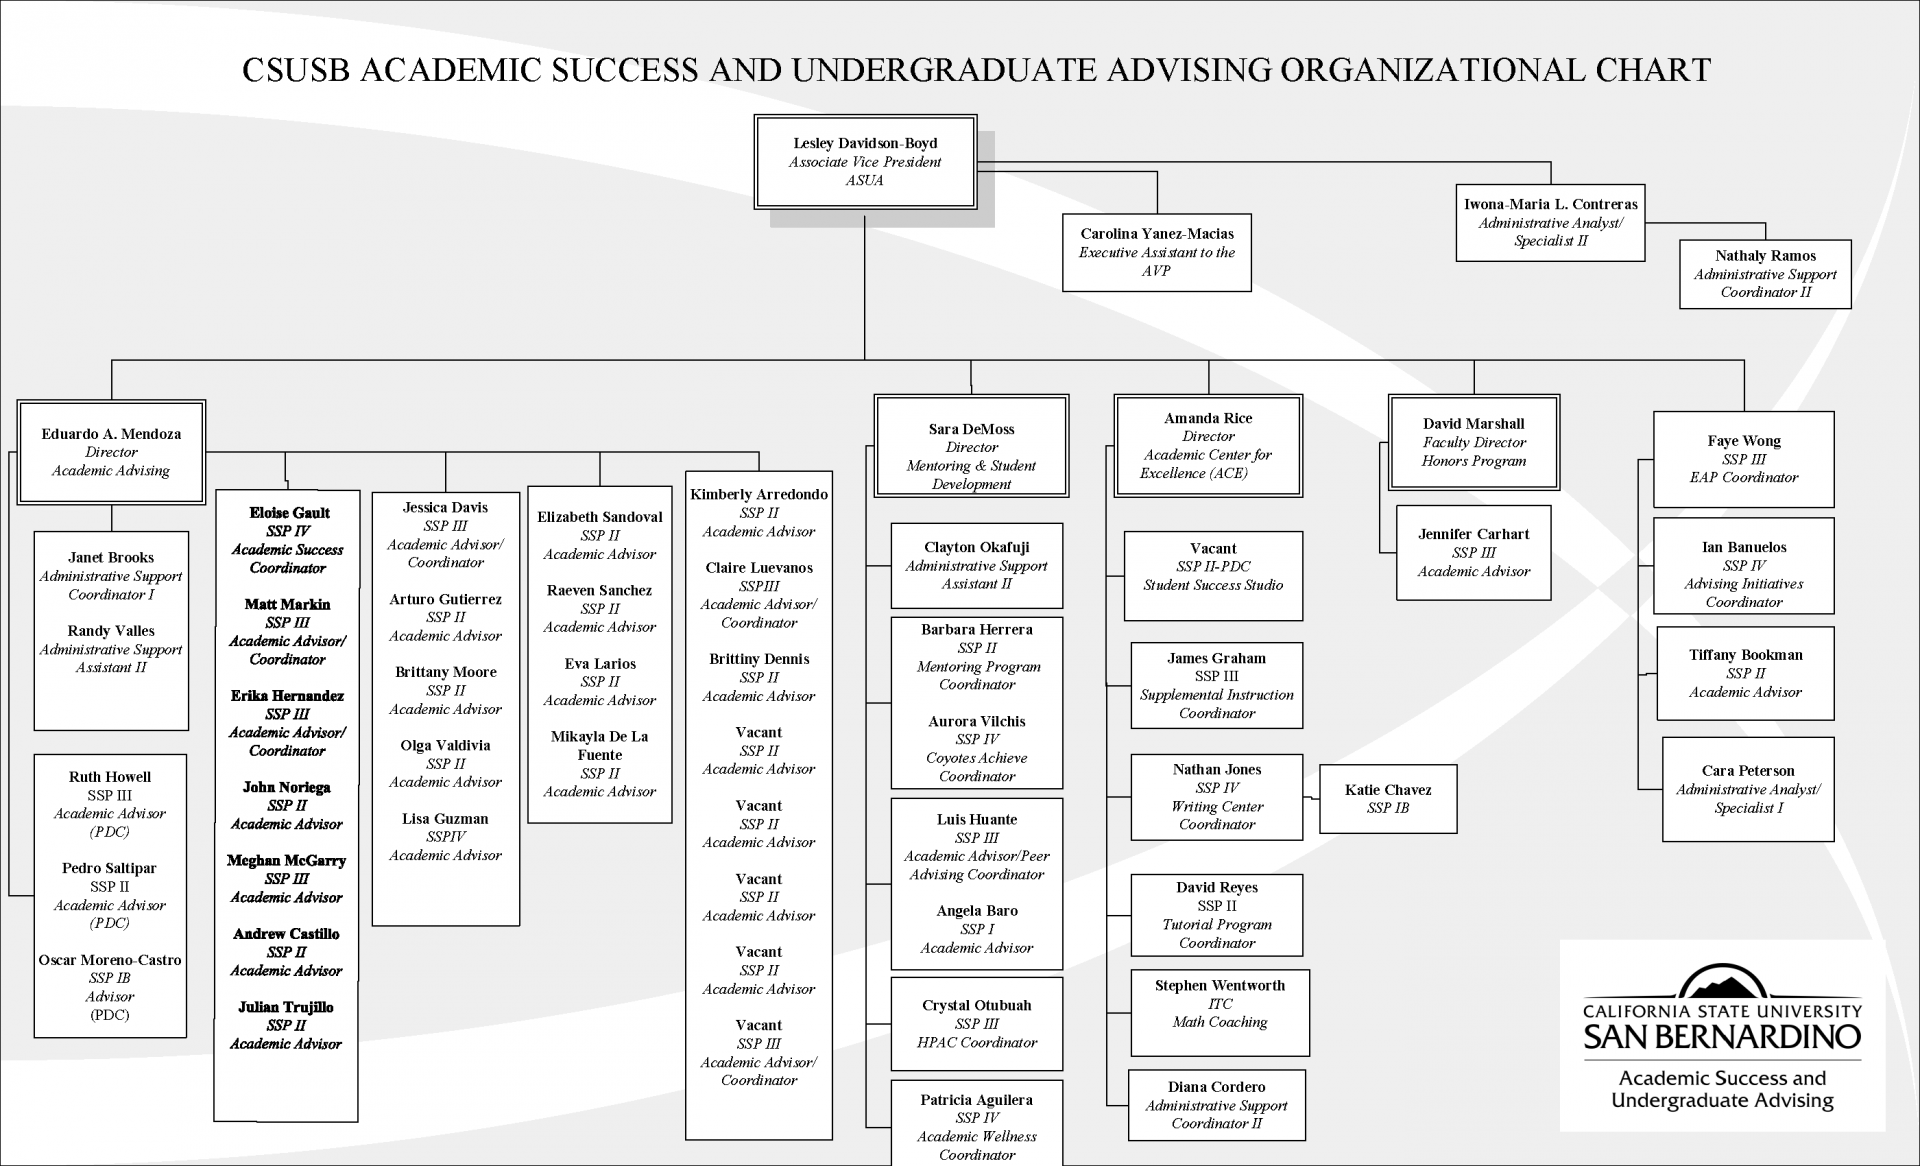 ASUA Organizational Chart